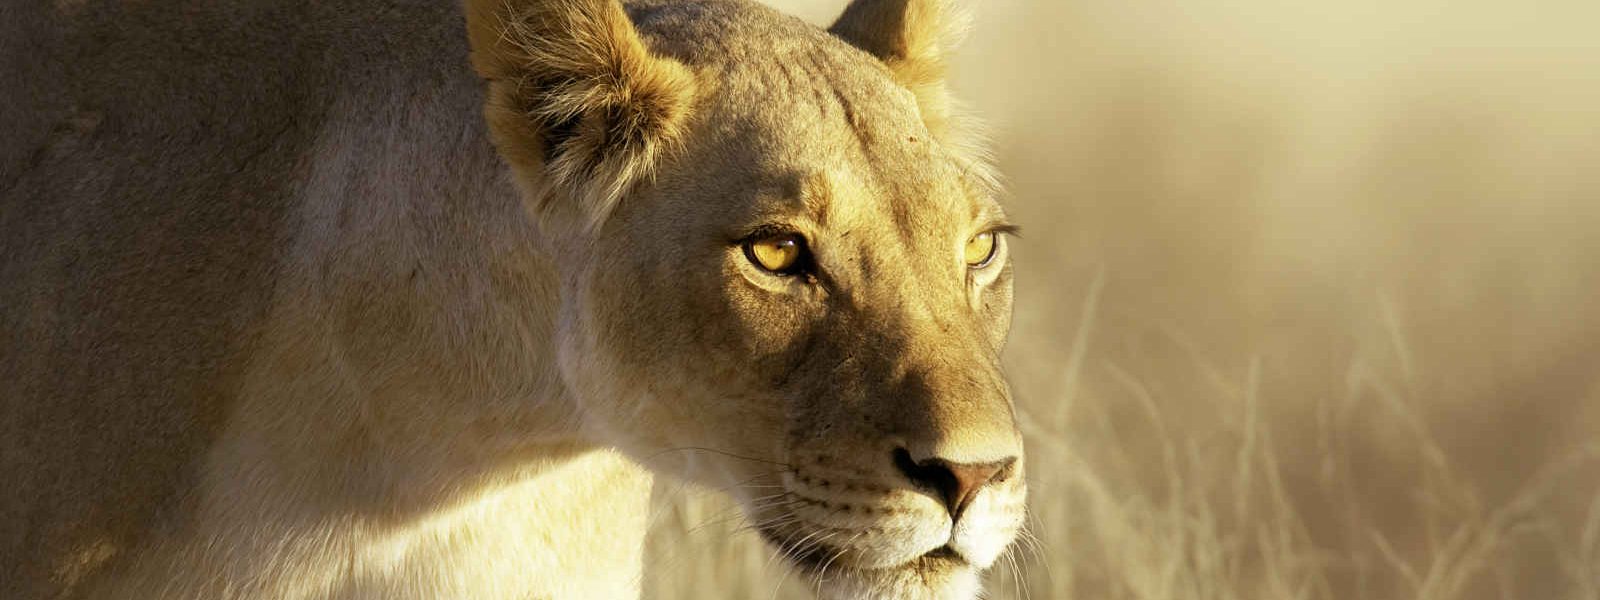 Lioness, Kalahari Gemsbok National Park, South Africa